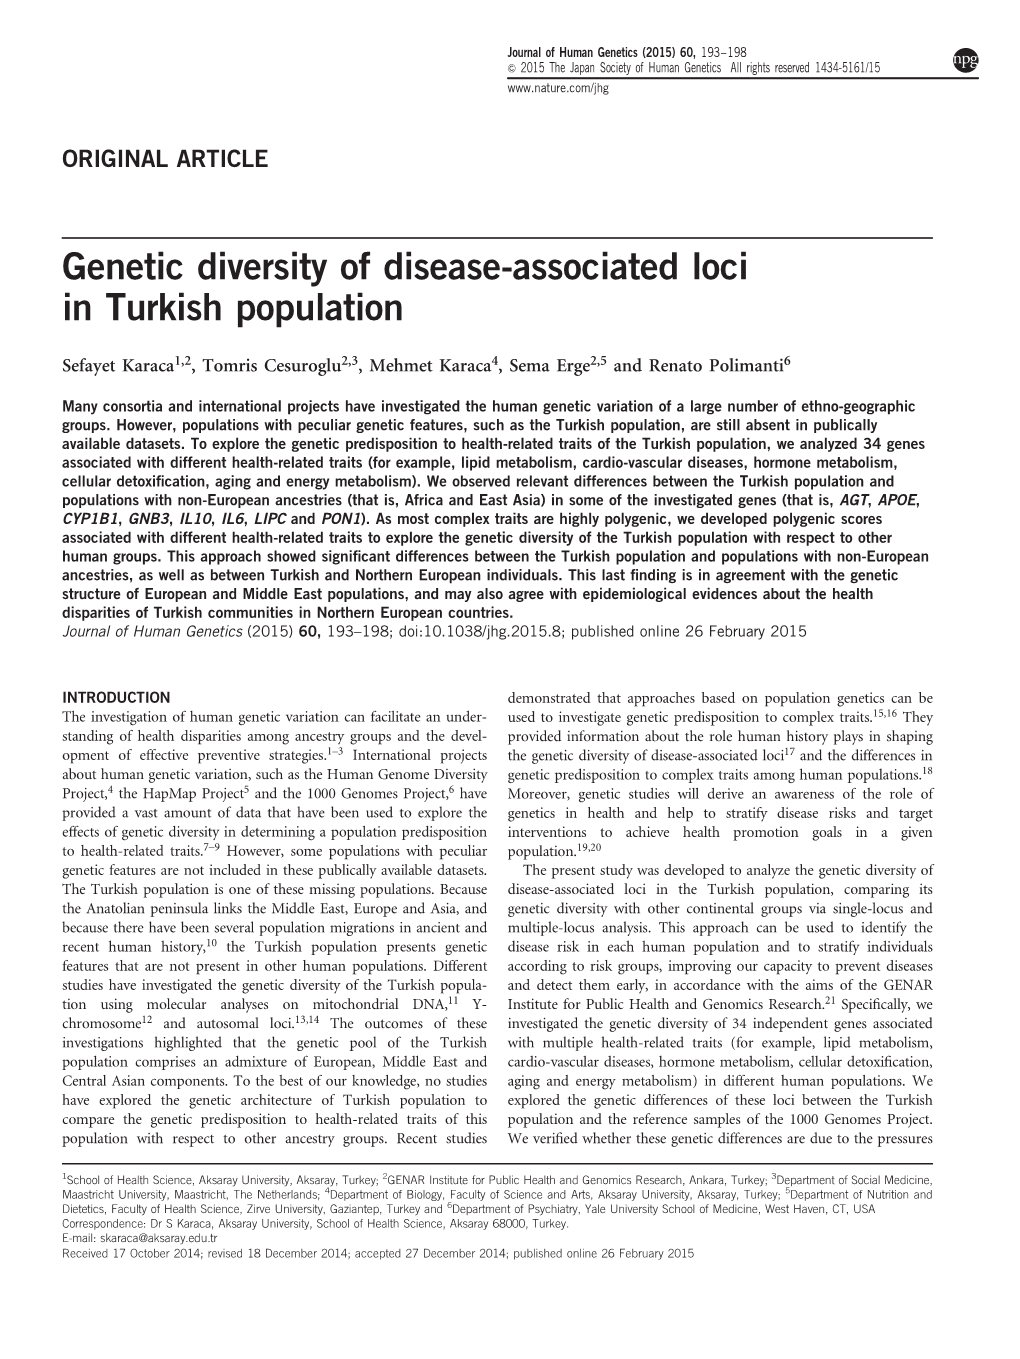 Genetic Diversity of Disease-Associated Loci in Turkish Population